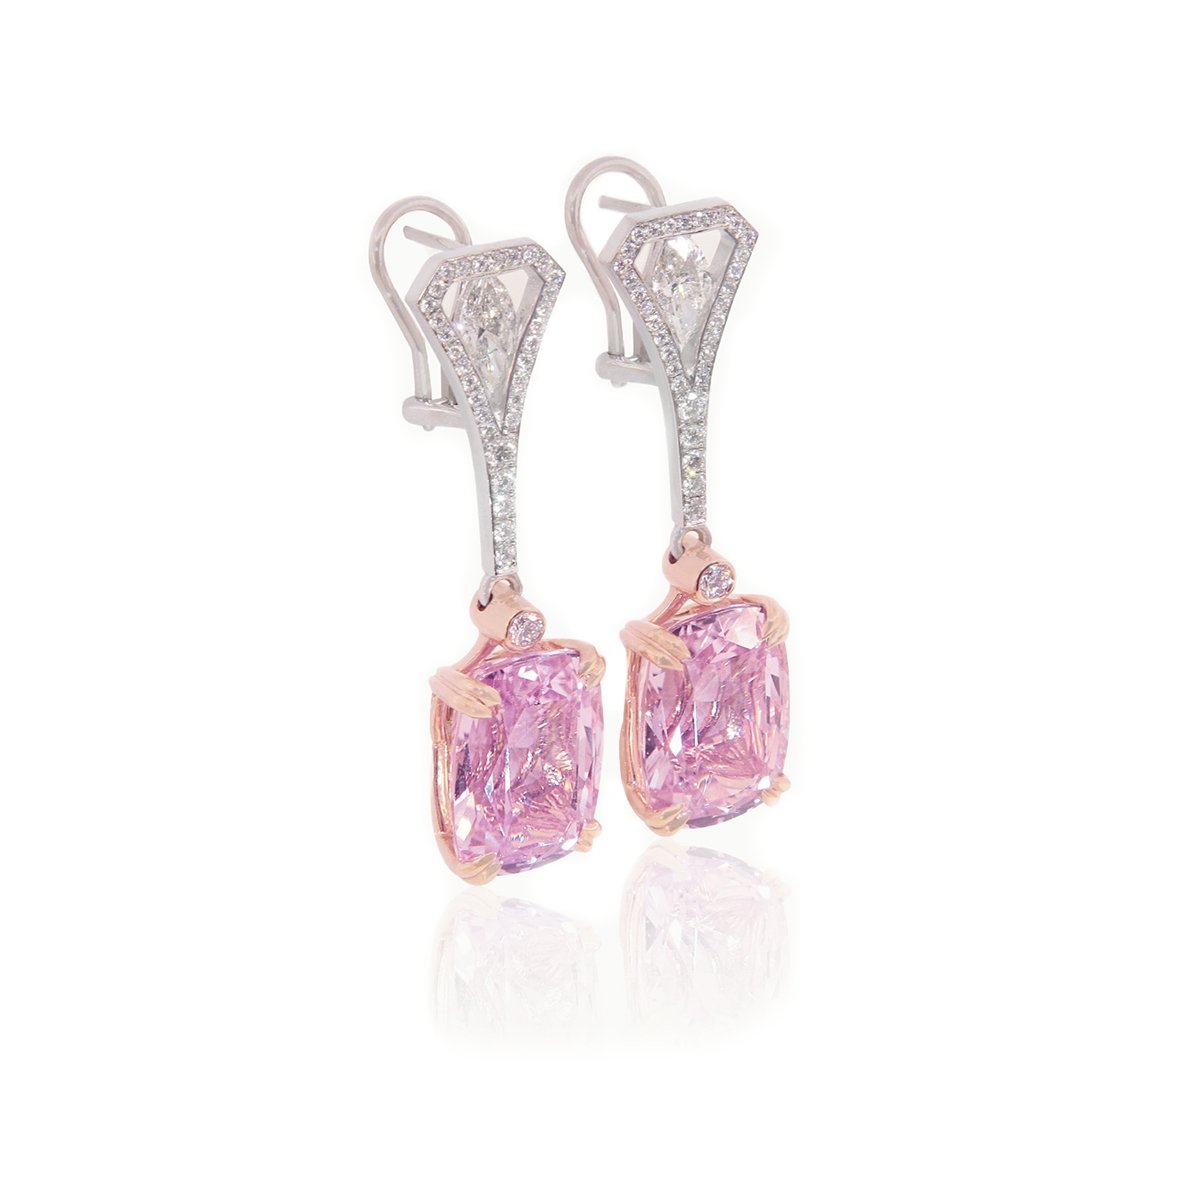 "Endless Romance" pink kunzite earrings - Surround Art & Diamonds Jewelry by Surround Art & Diamonds